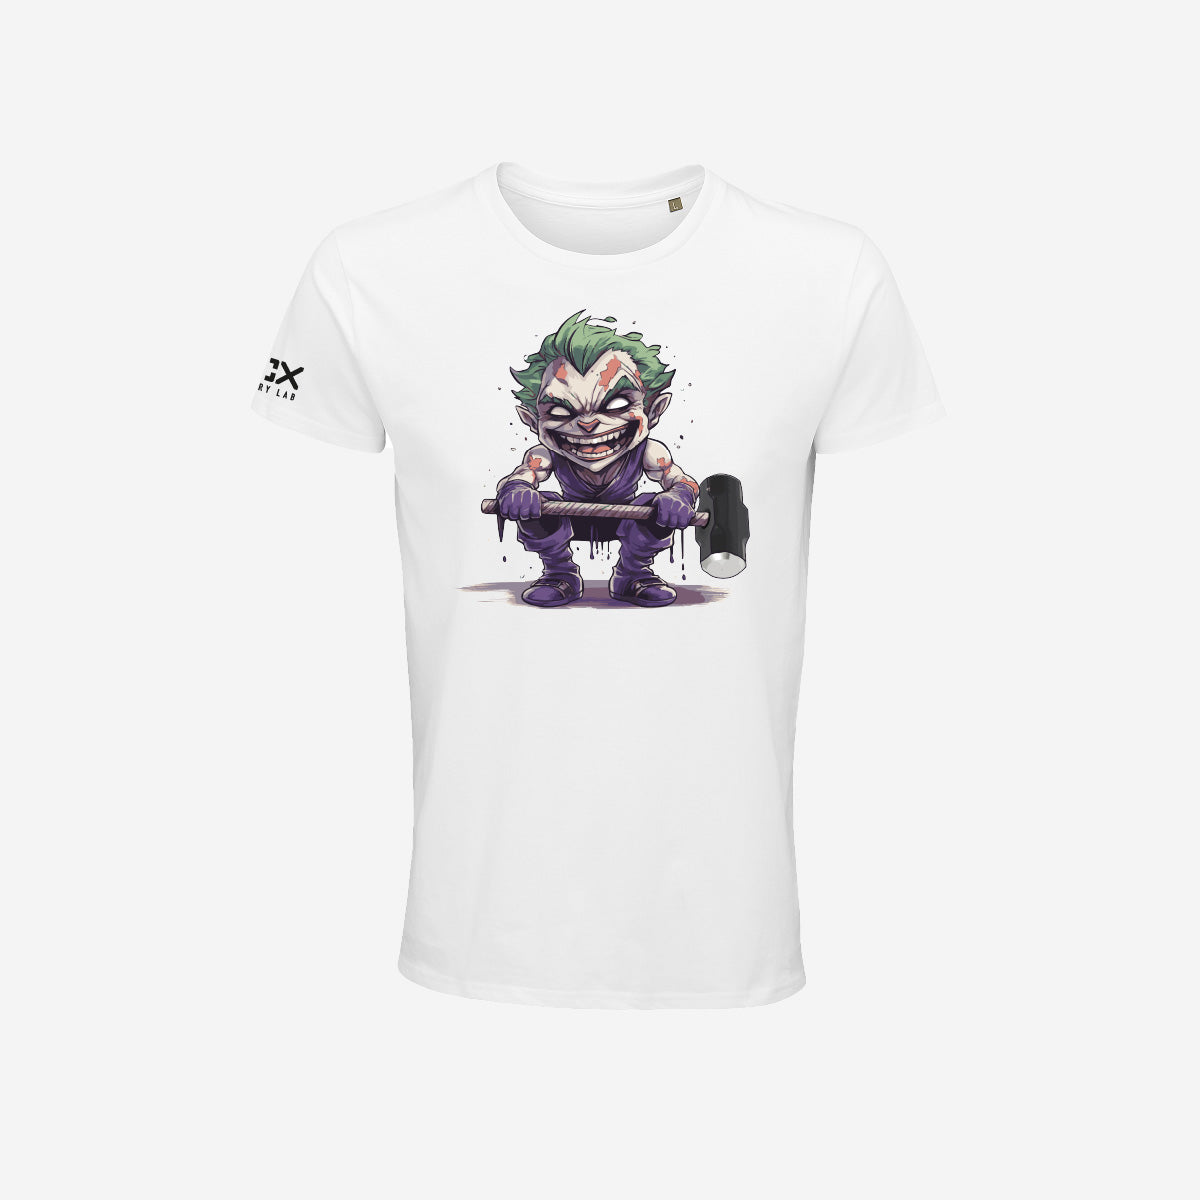 T-shirt Uomo - Joker